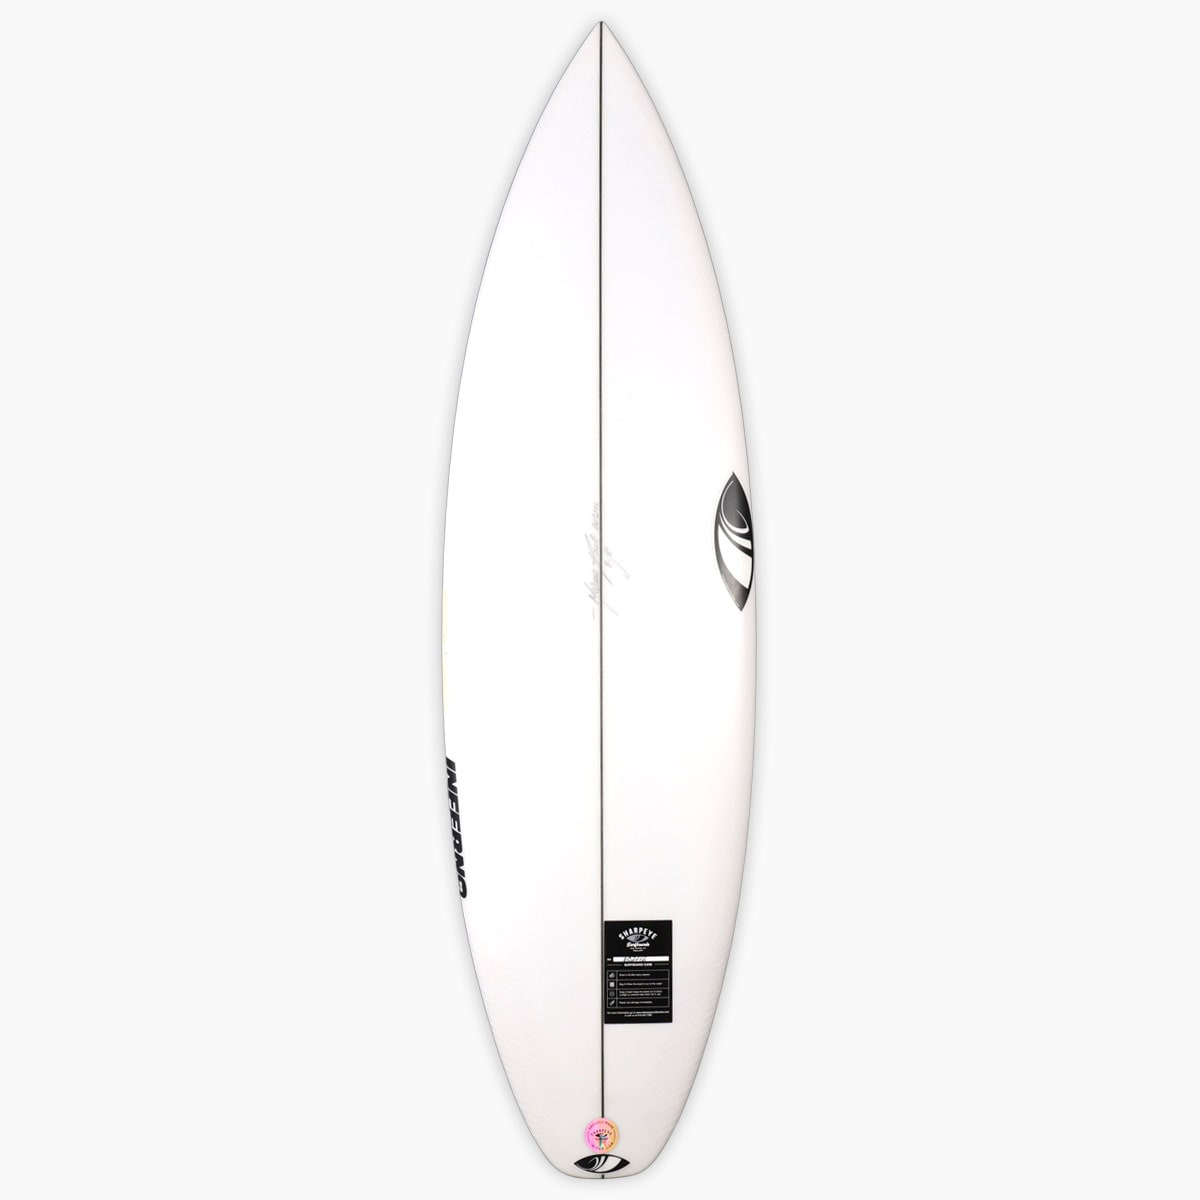 SurfBoardNet / サーフボード ブランド:SHARP EYE SURFBOARDS